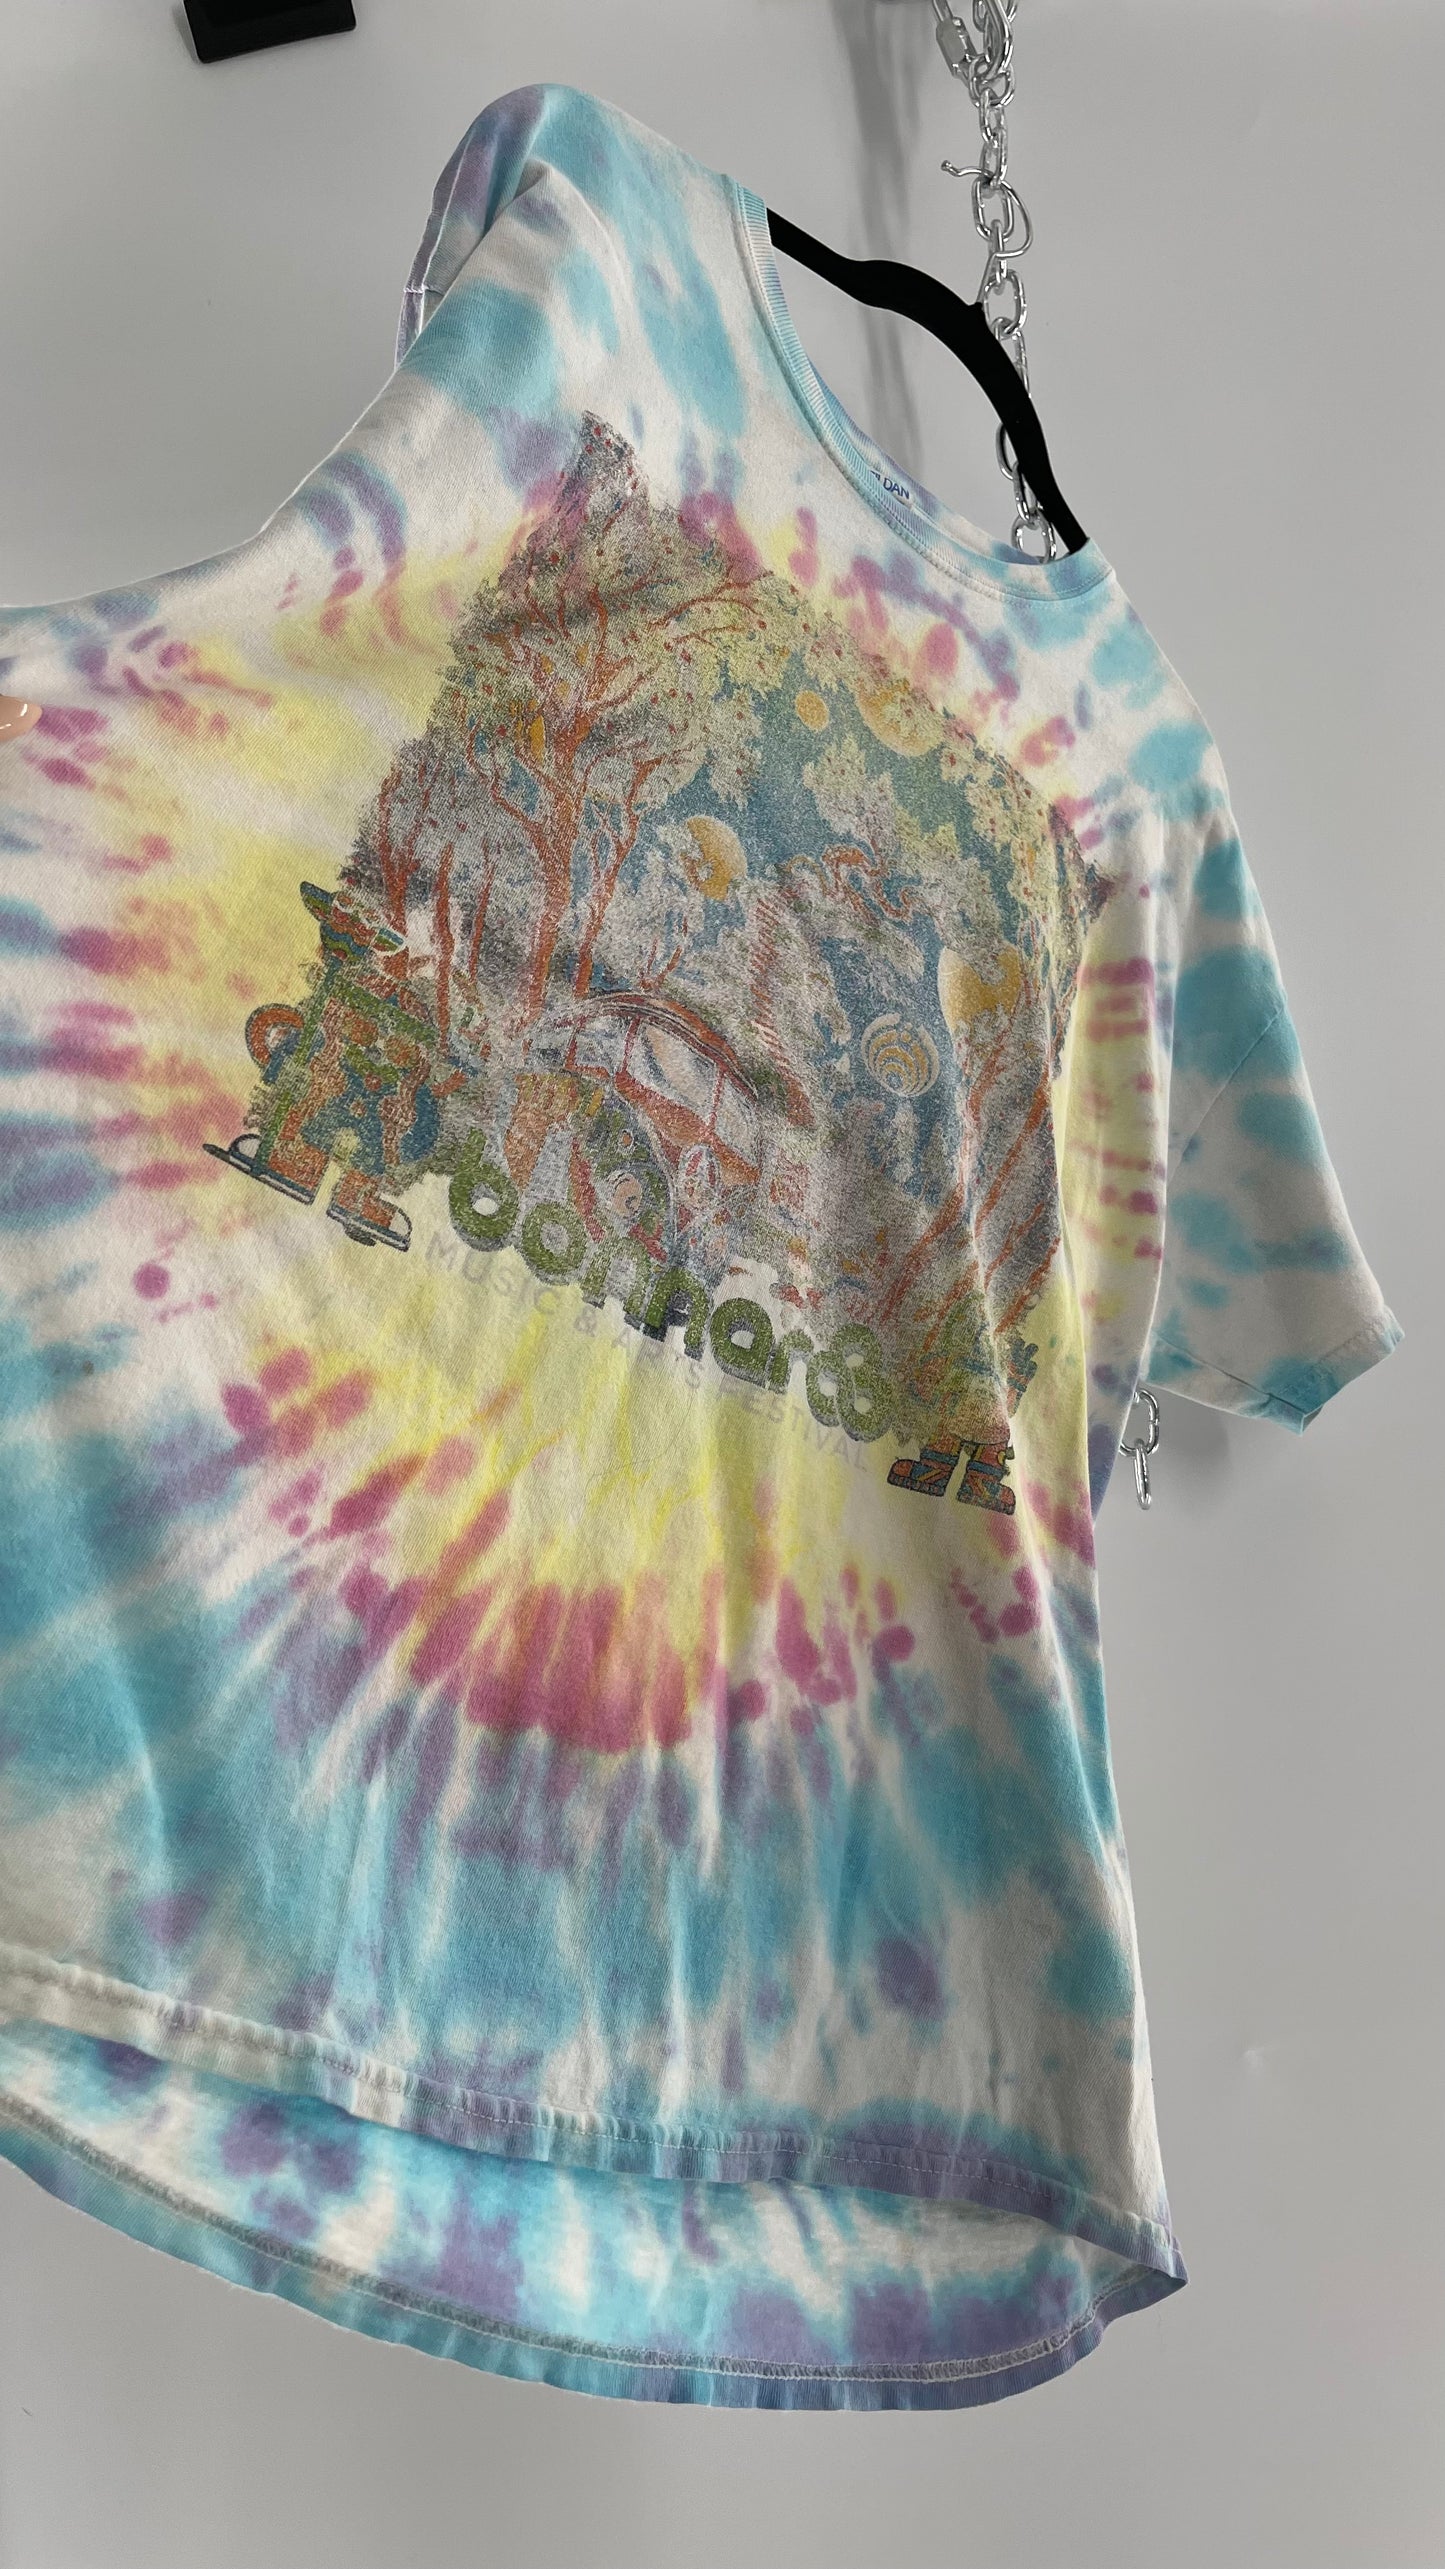 2018 Tie Dye Bonaroo Festival Concert T Shirts (XL)